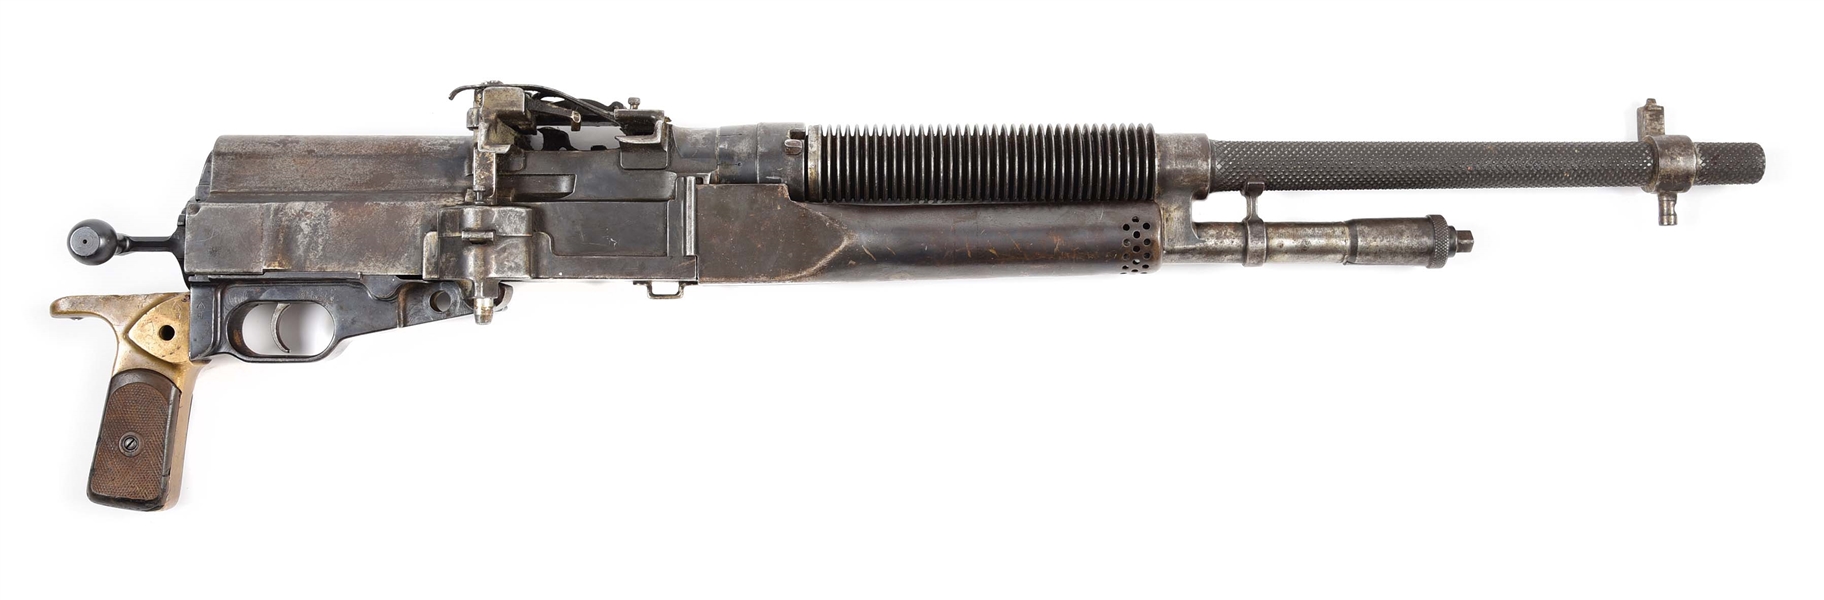 (N) SOUTH AMERICAN CONTRACT HOTCHKISS PORTATIVE MODEL 1910 MACHINE GUN (CURIO AND RELIC).